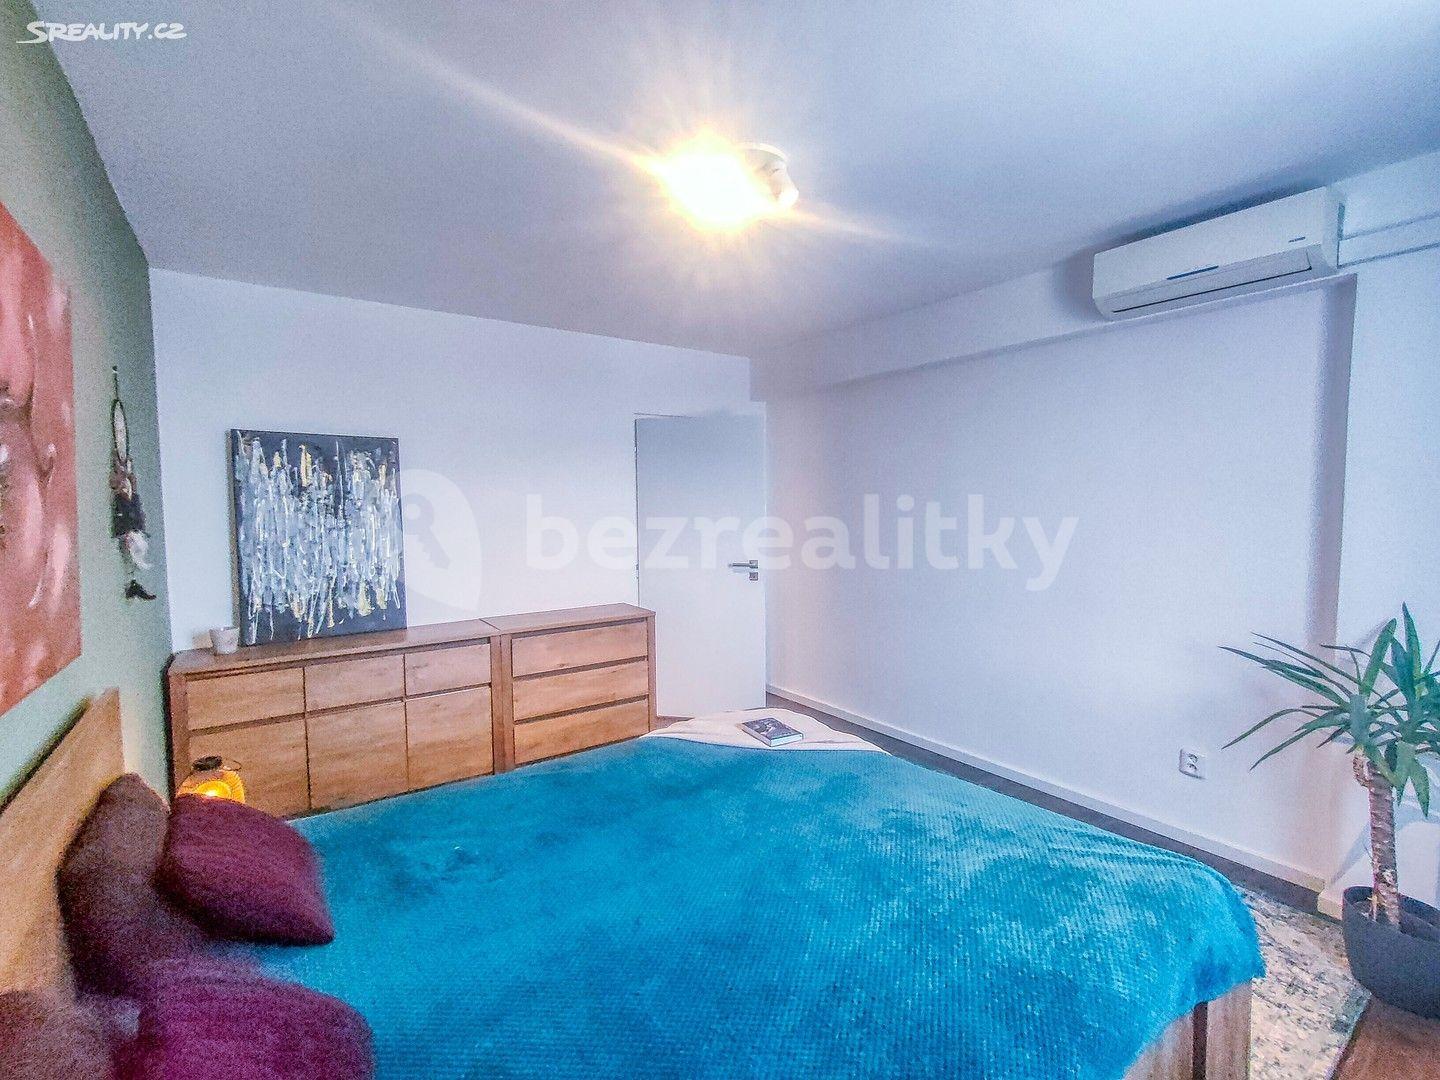 Predaj bytu 3-izbový 80 m², Roháčova, Kolín, Středočeský kraj